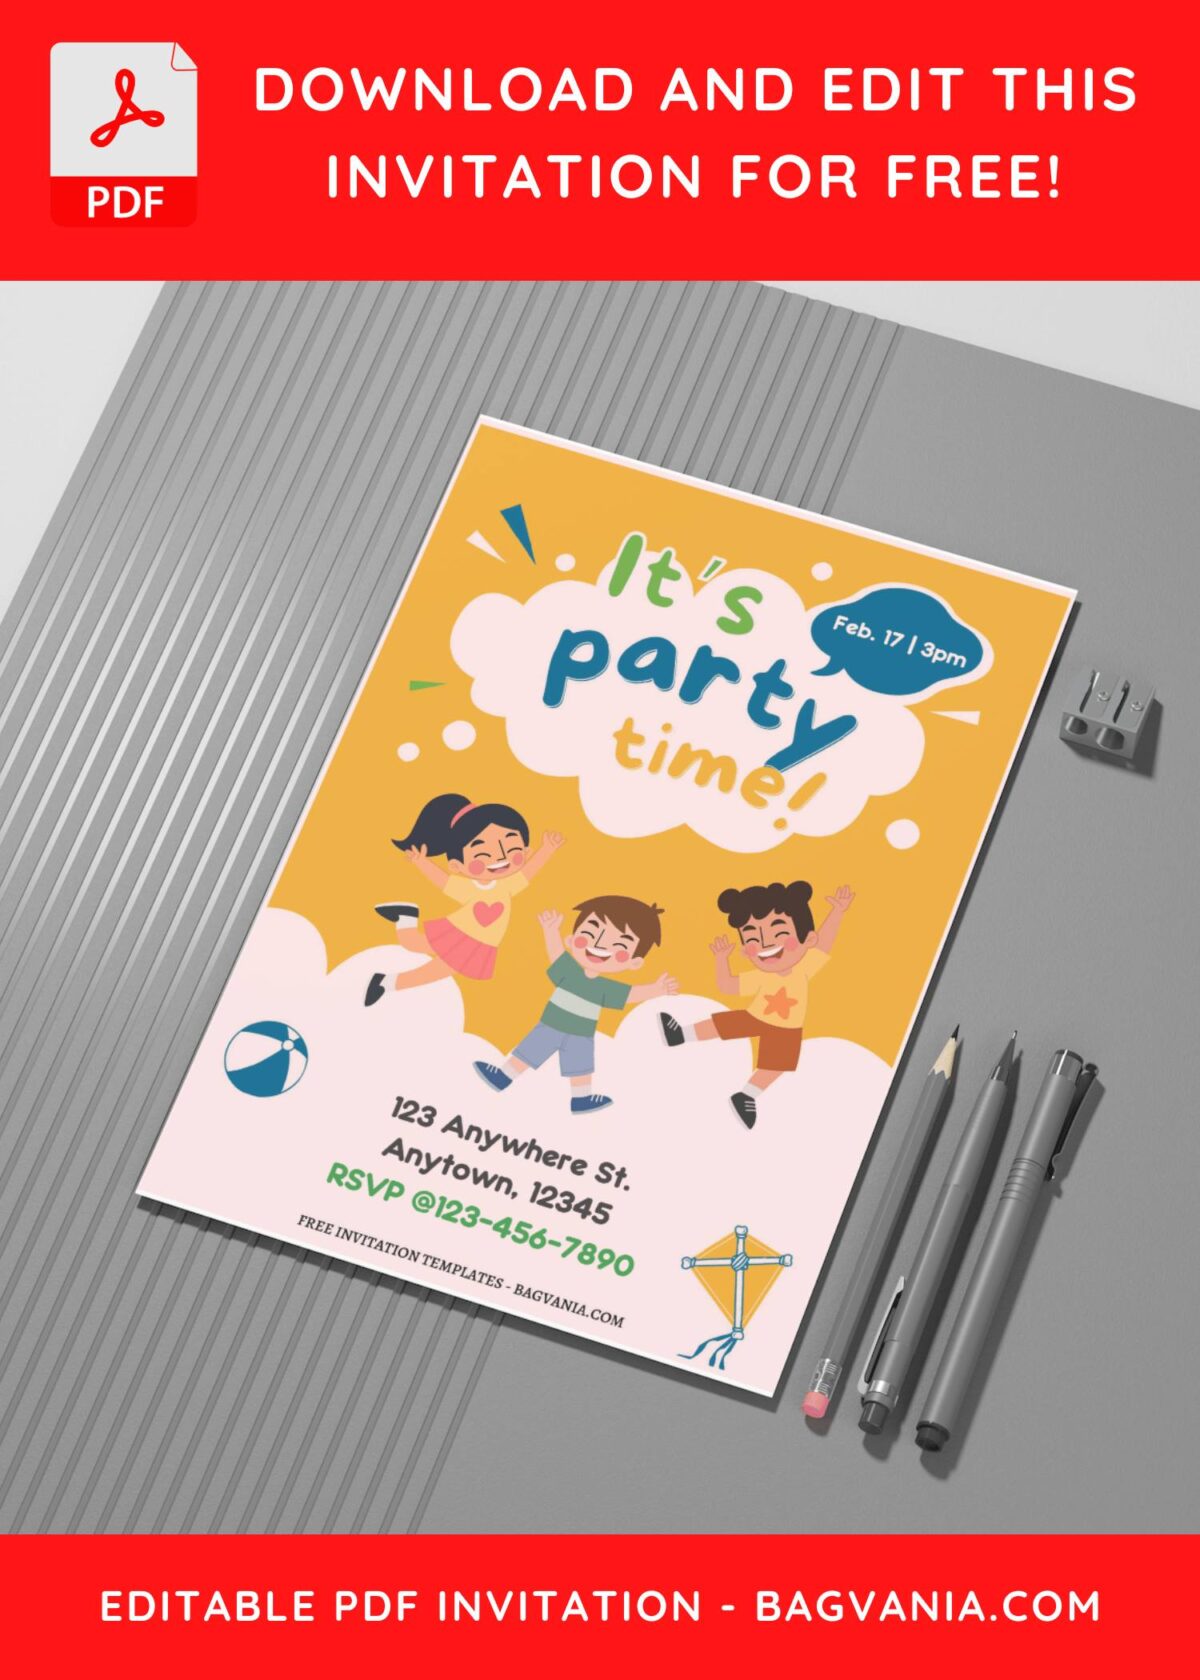 (Easily Edit PDF Invitation) Delightful Kids Party Time Invitation G